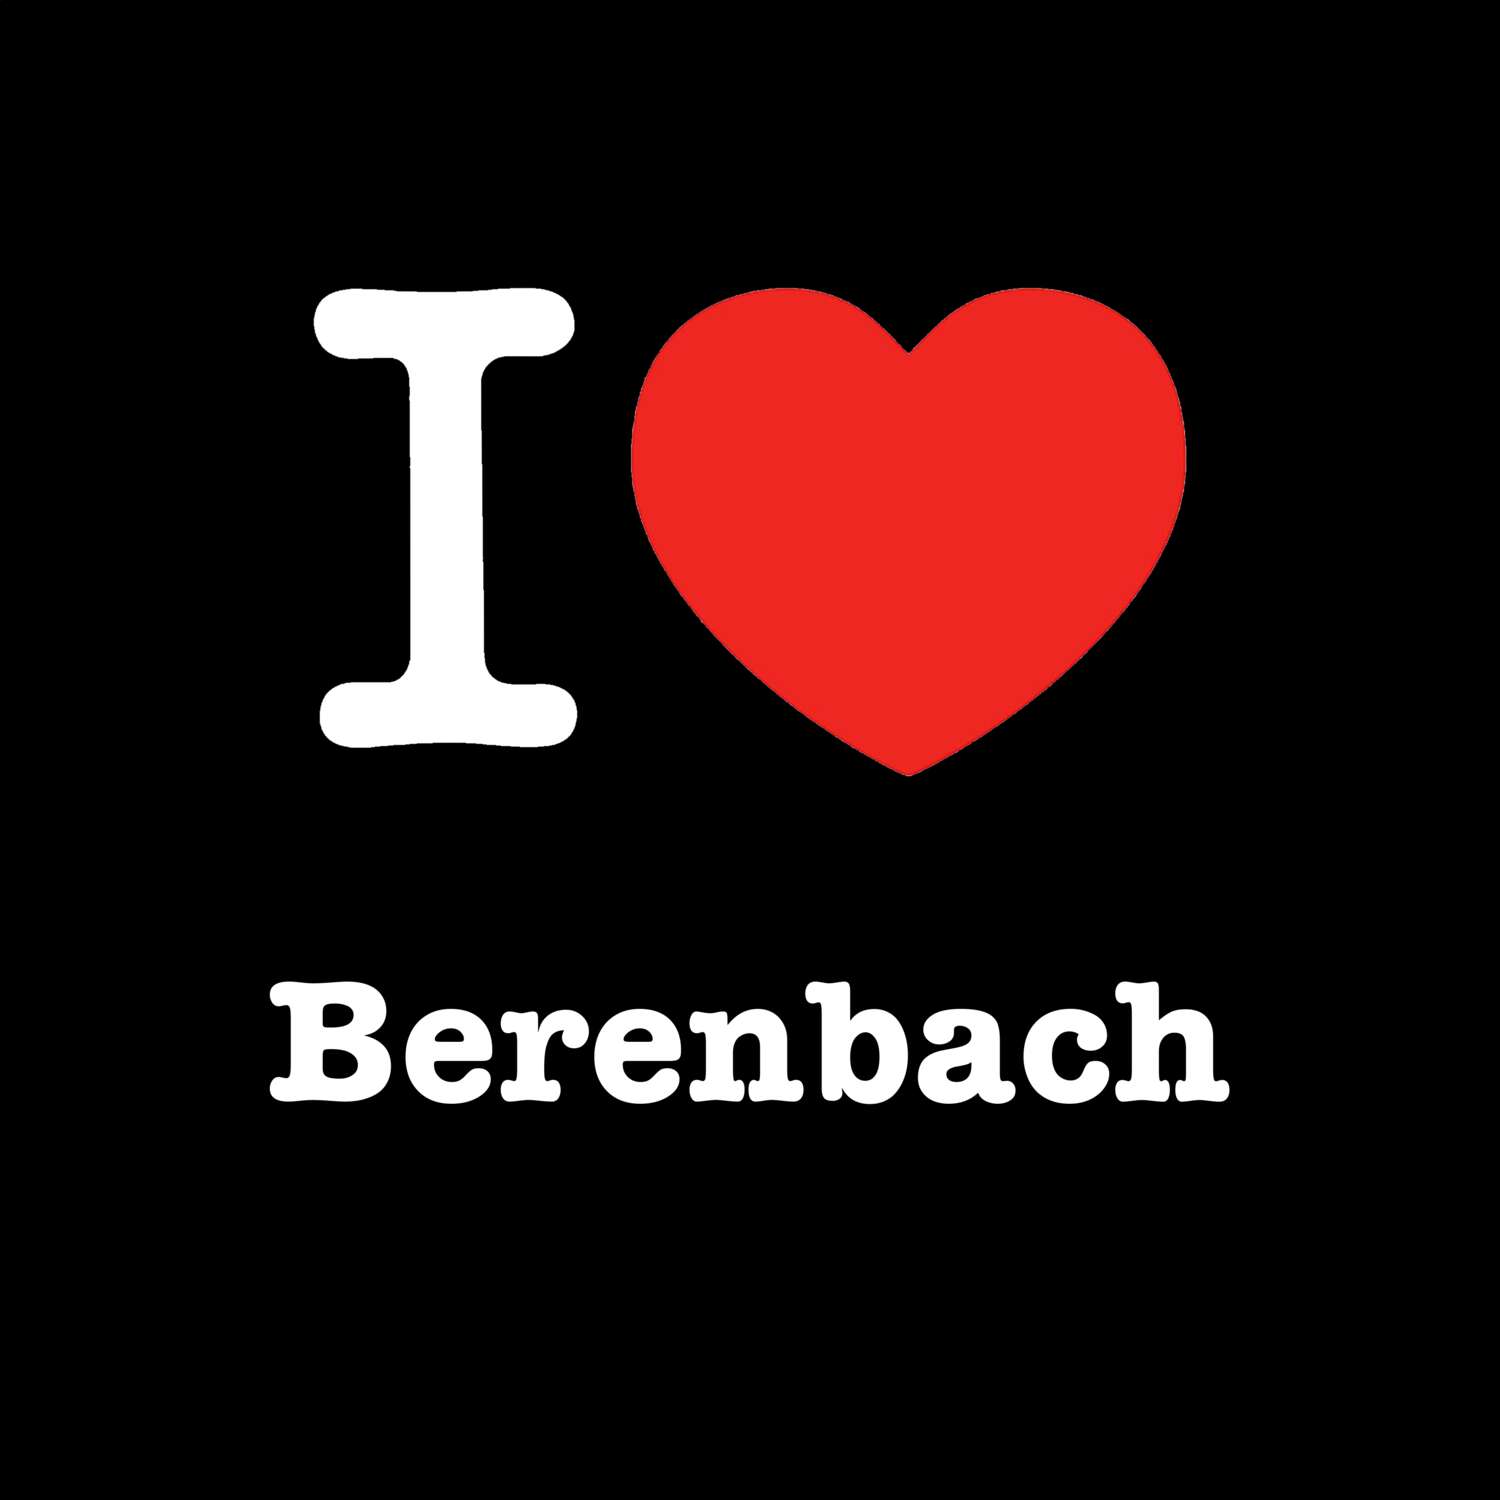 Berenbach T-Shirt »I love«